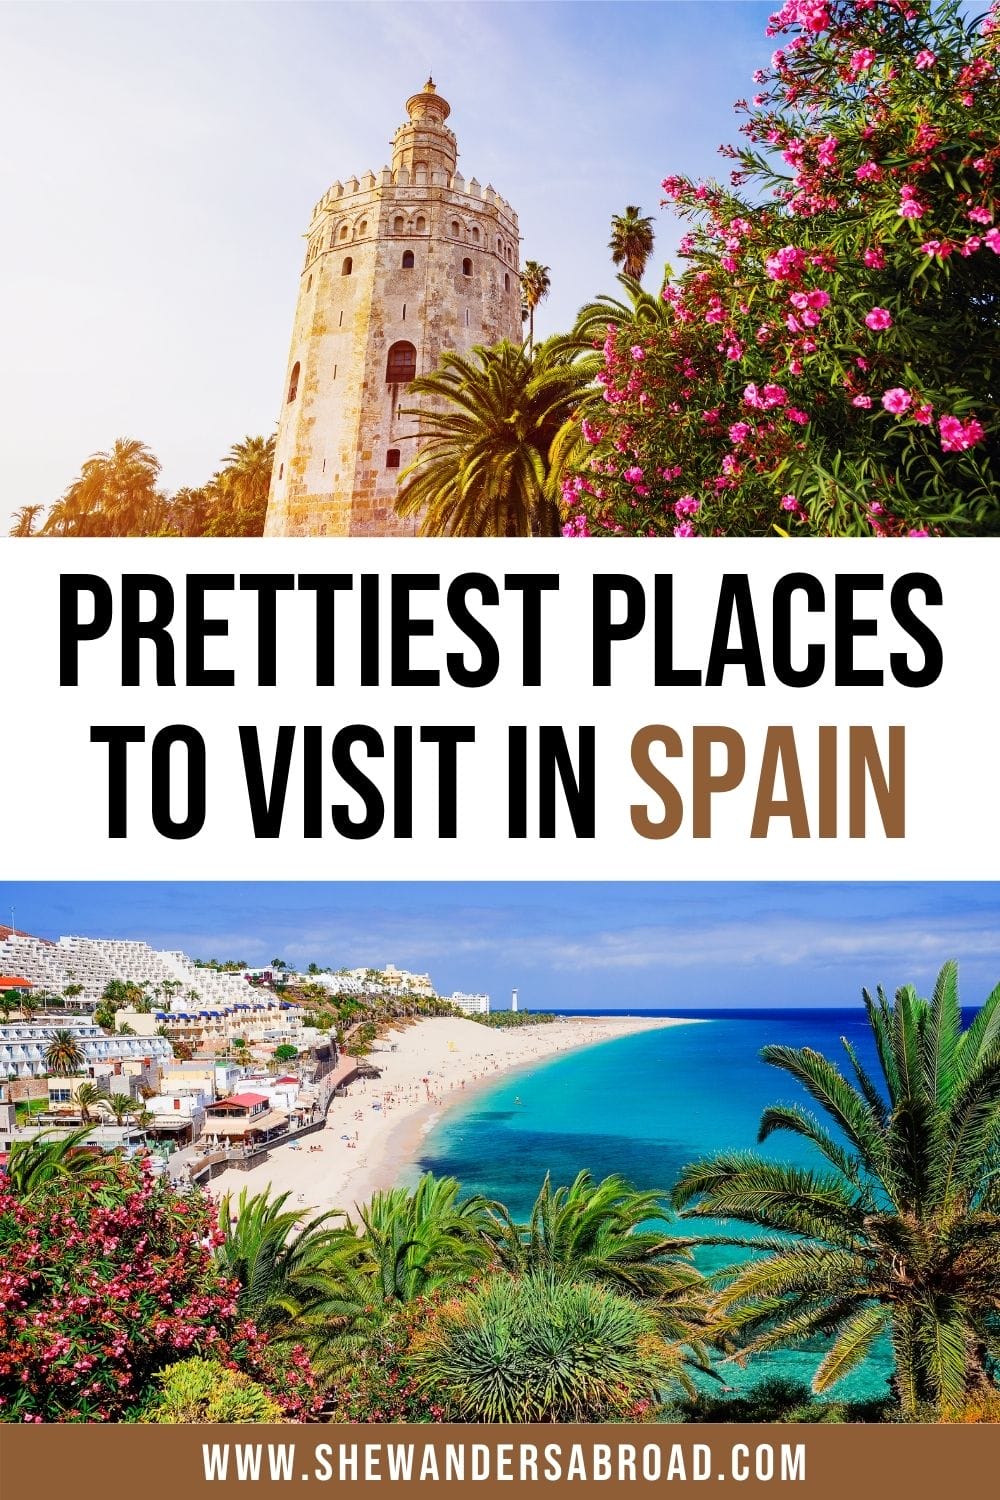 Spain Bucket List: 30 Most Beautiful Places in Spain